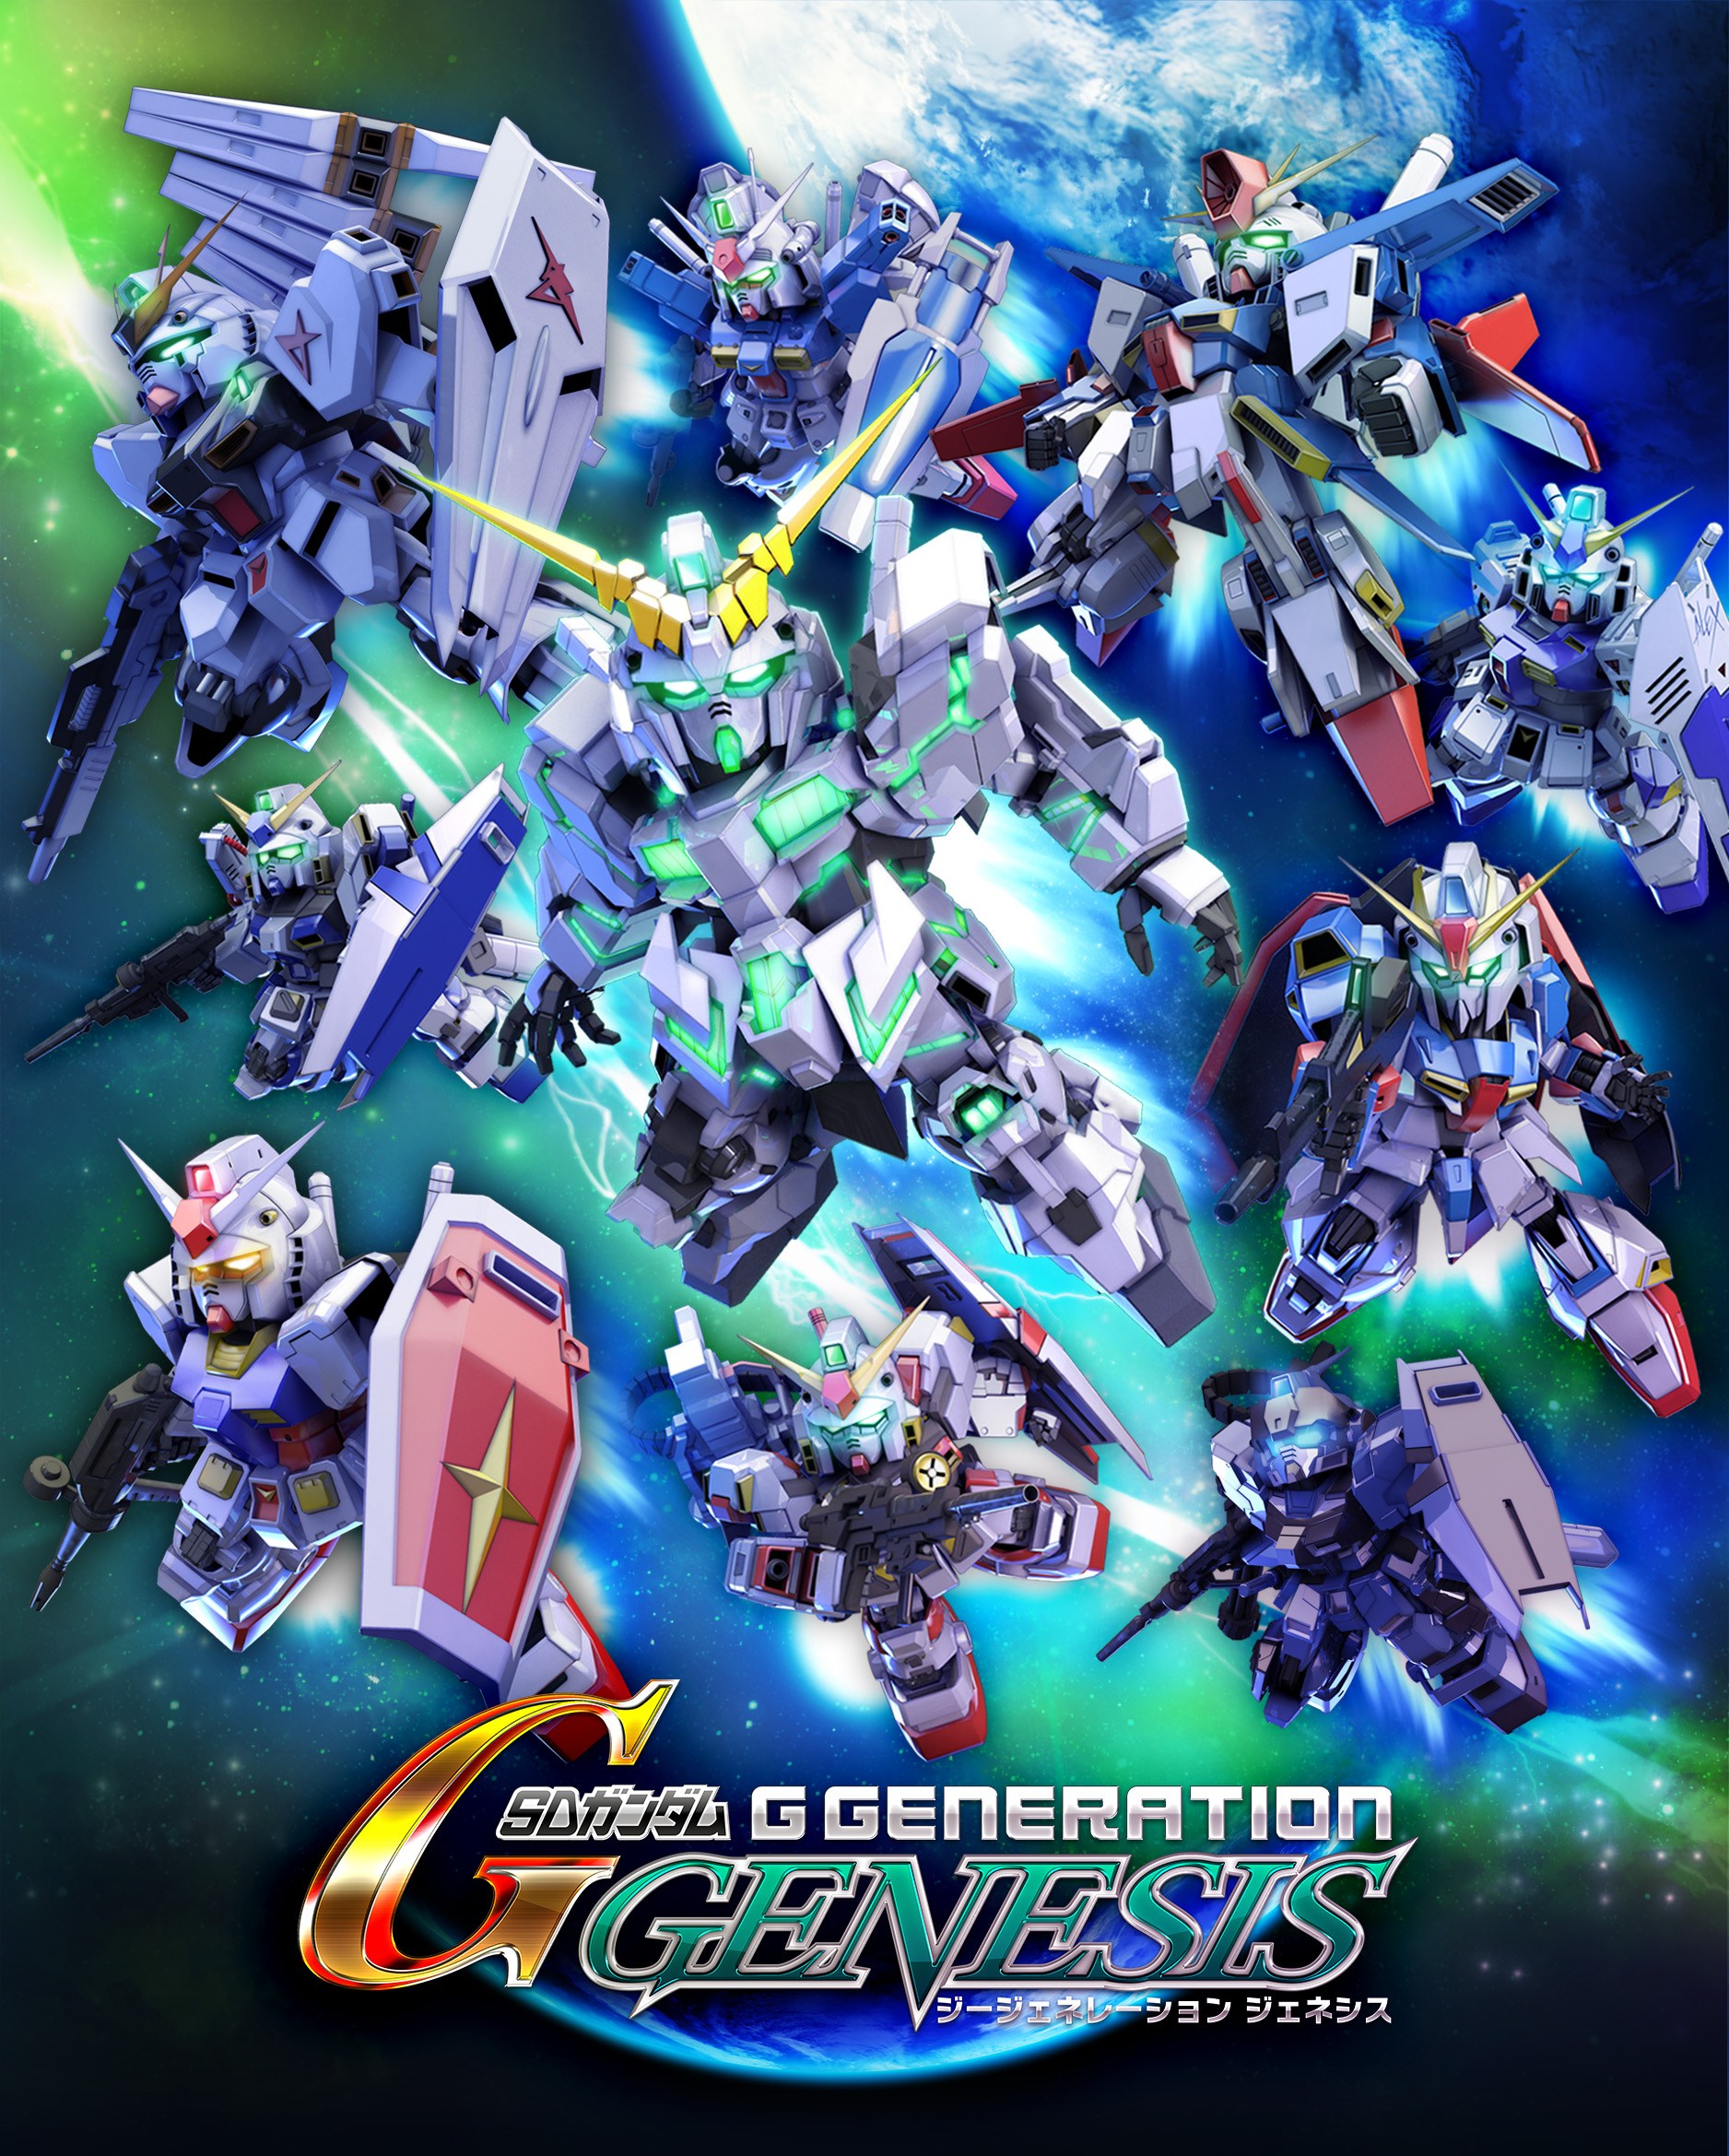 sd gundam g generation review